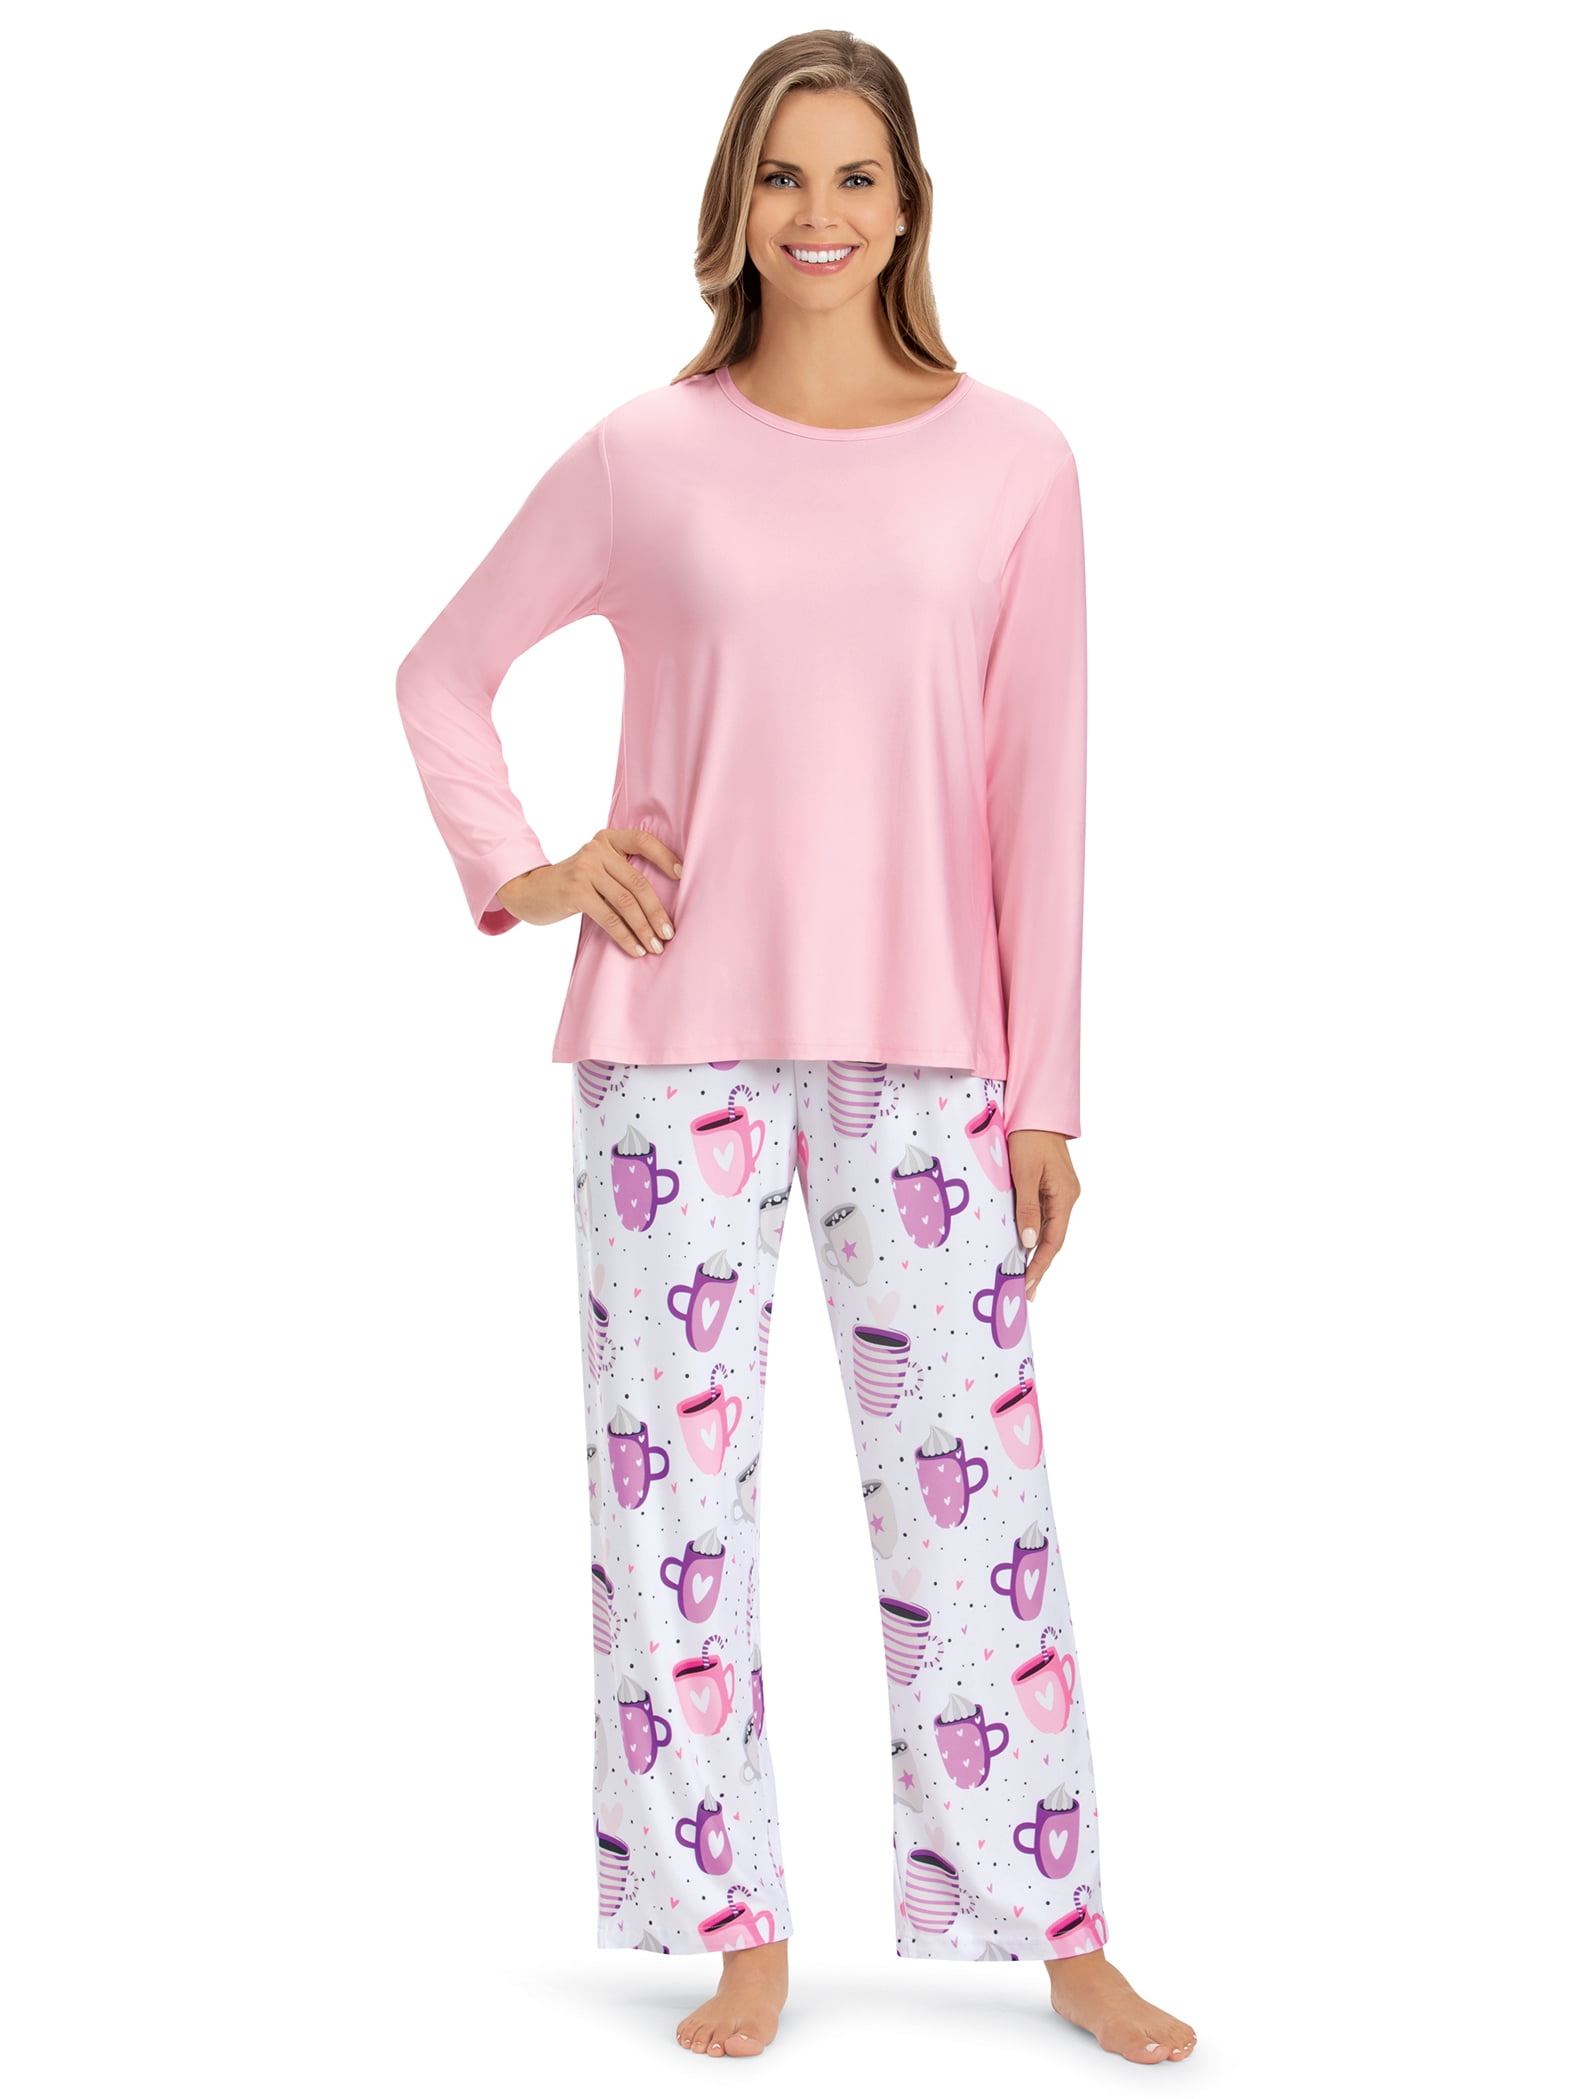 Ladies Famous Make Short Sleeved 100% Cotton Black & Floral Jersey Pyjamas 6-22 